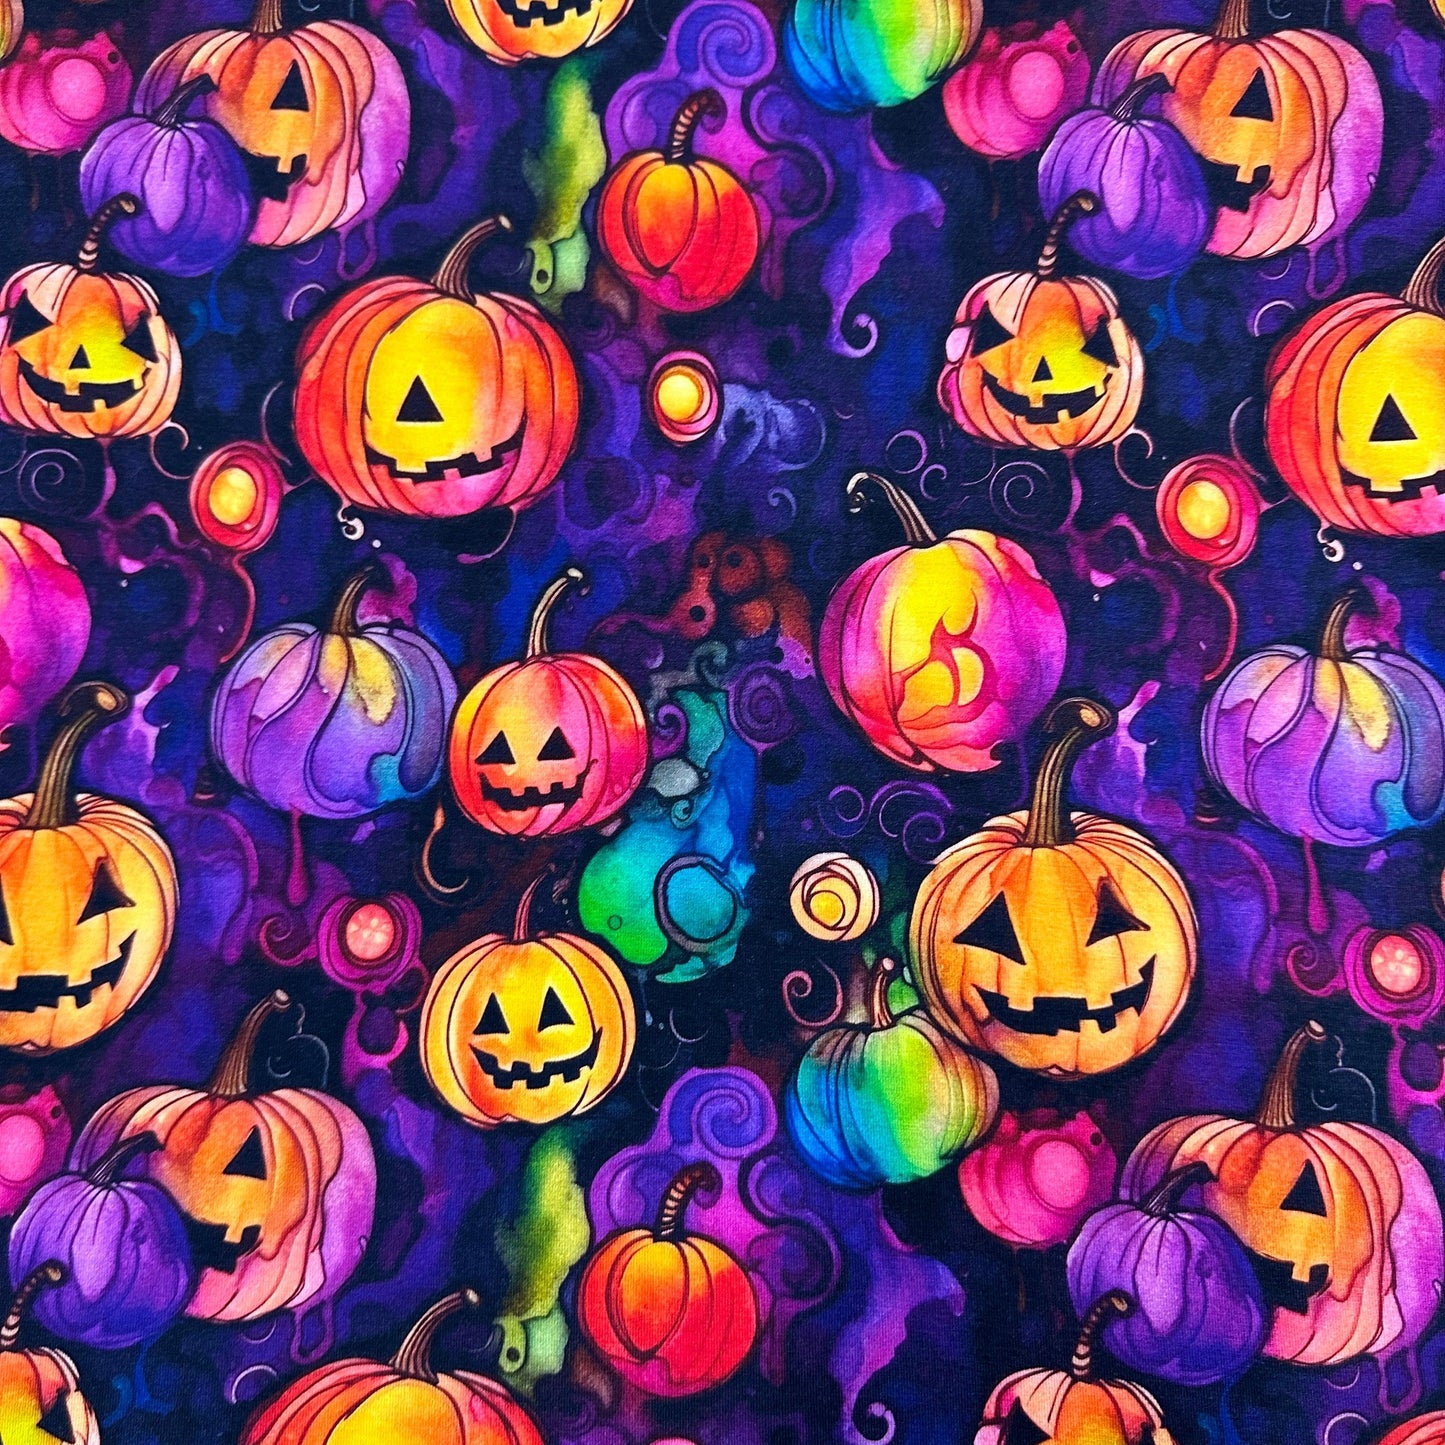 Pumpkins on Purple Bamboo/Spandex Jersey Fabric - Nature's Fabrics